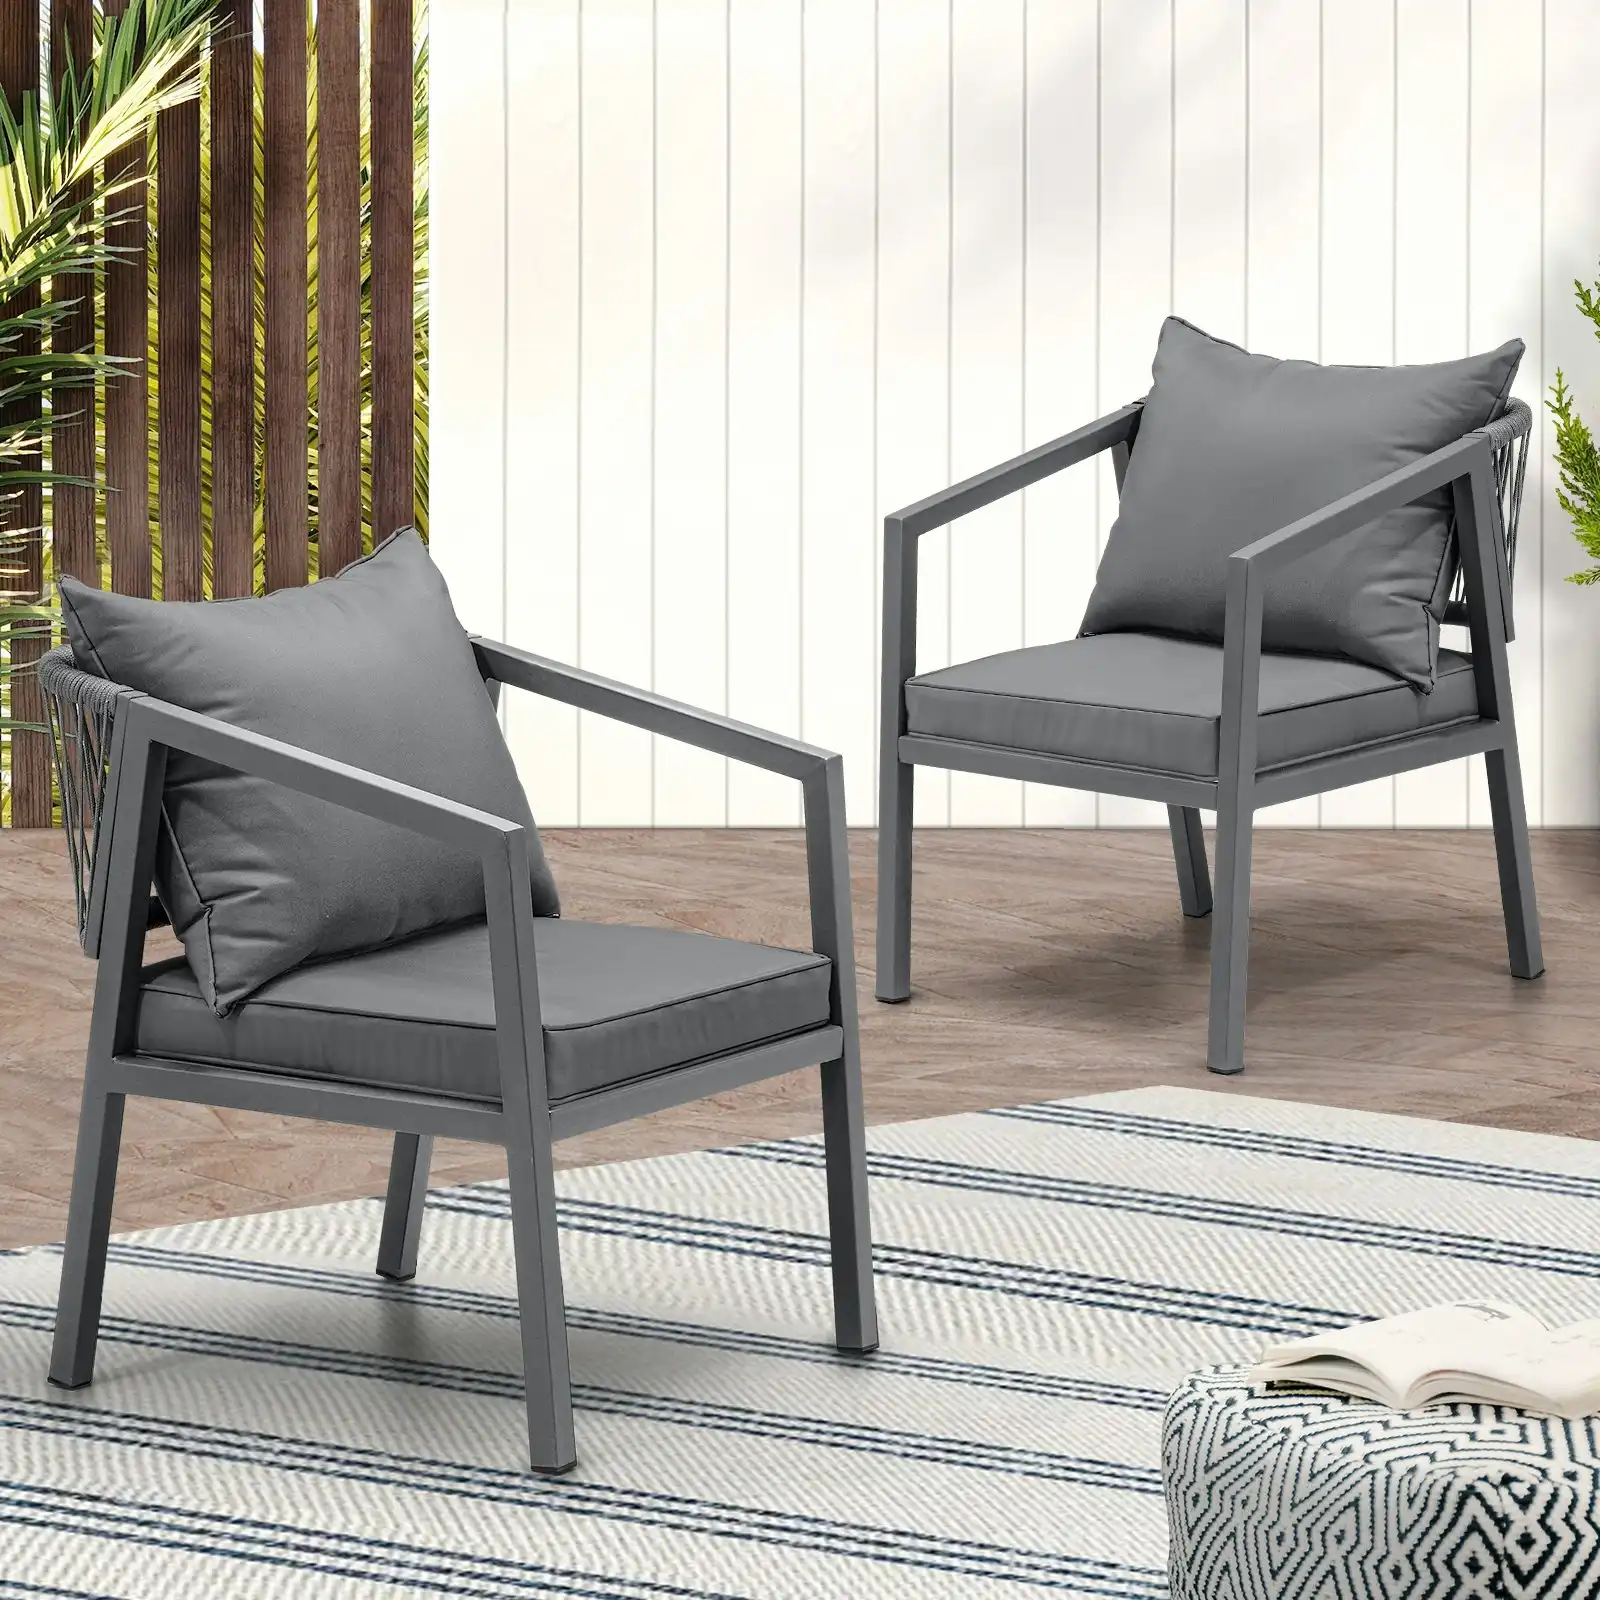 Livsip 2PCS Outdoor Furniture Chairs Garden Patio Garden Lounge Set Steel Frame